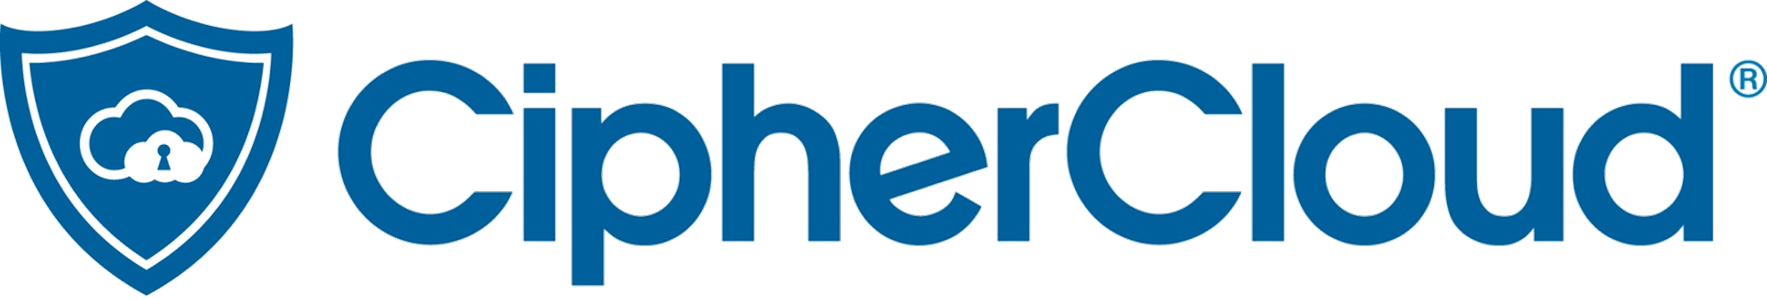 CipherCloud logo